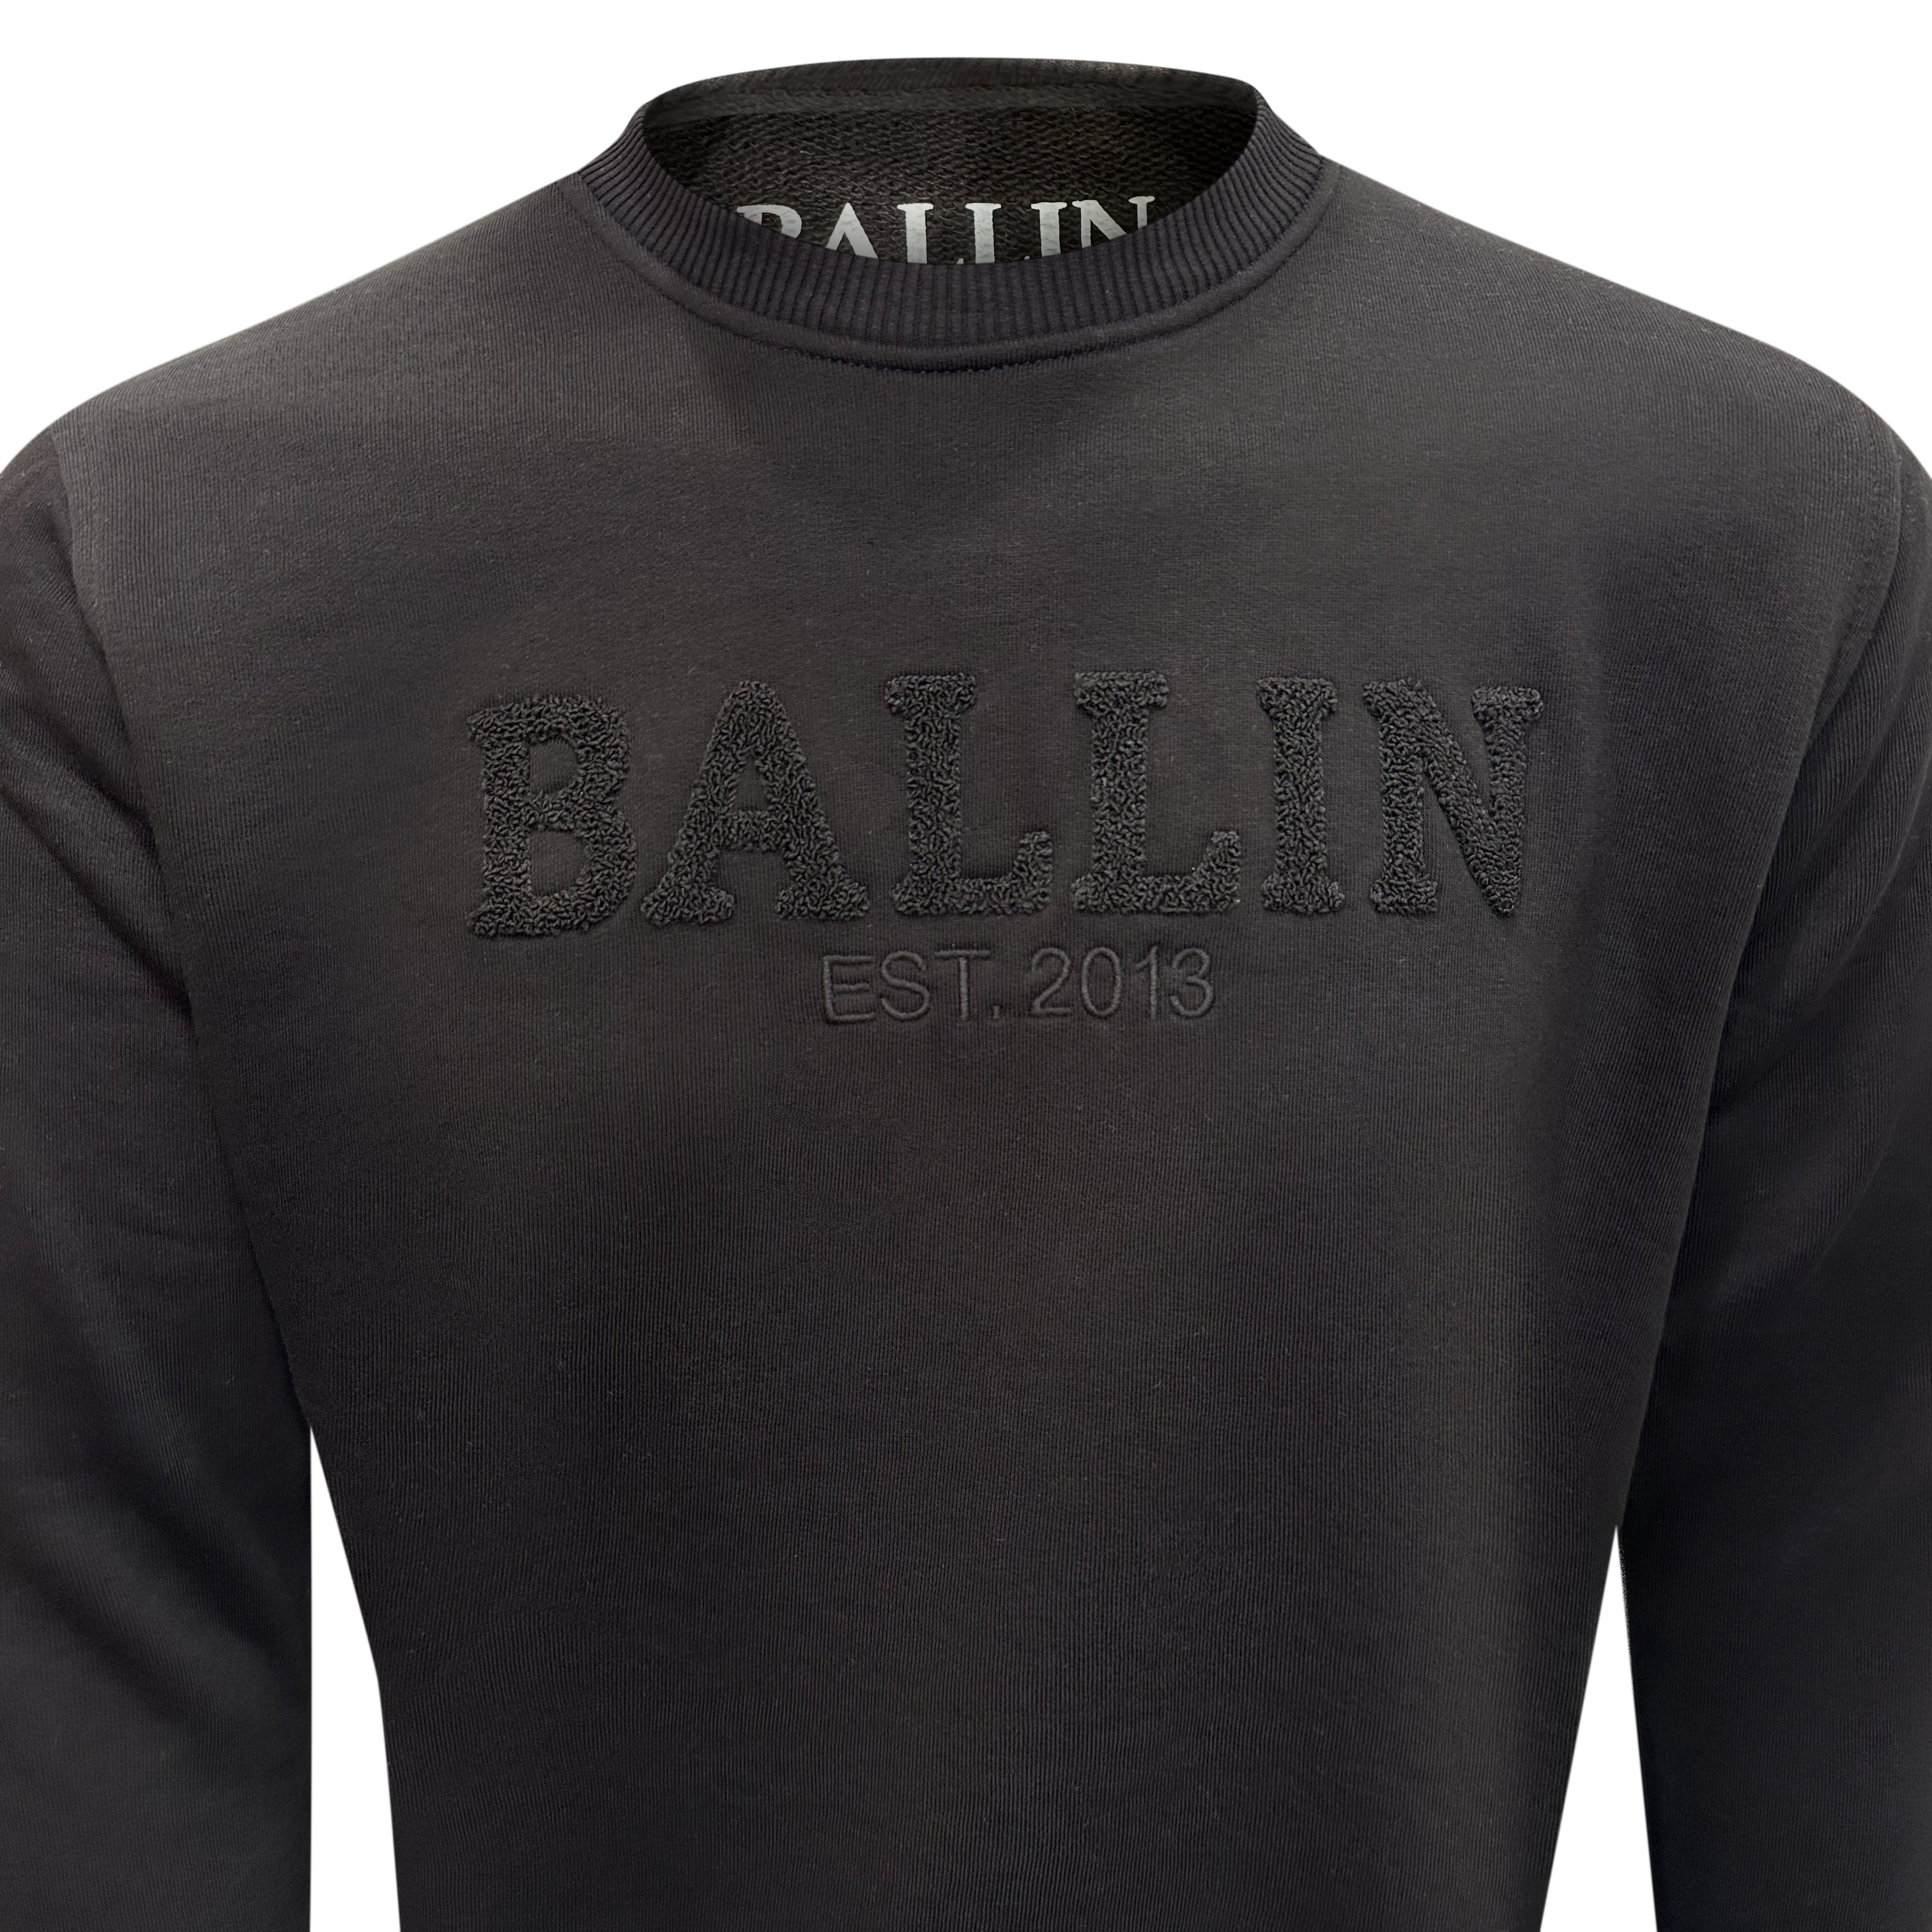 Sweater heren Ballin zwart - Streetfashion 86